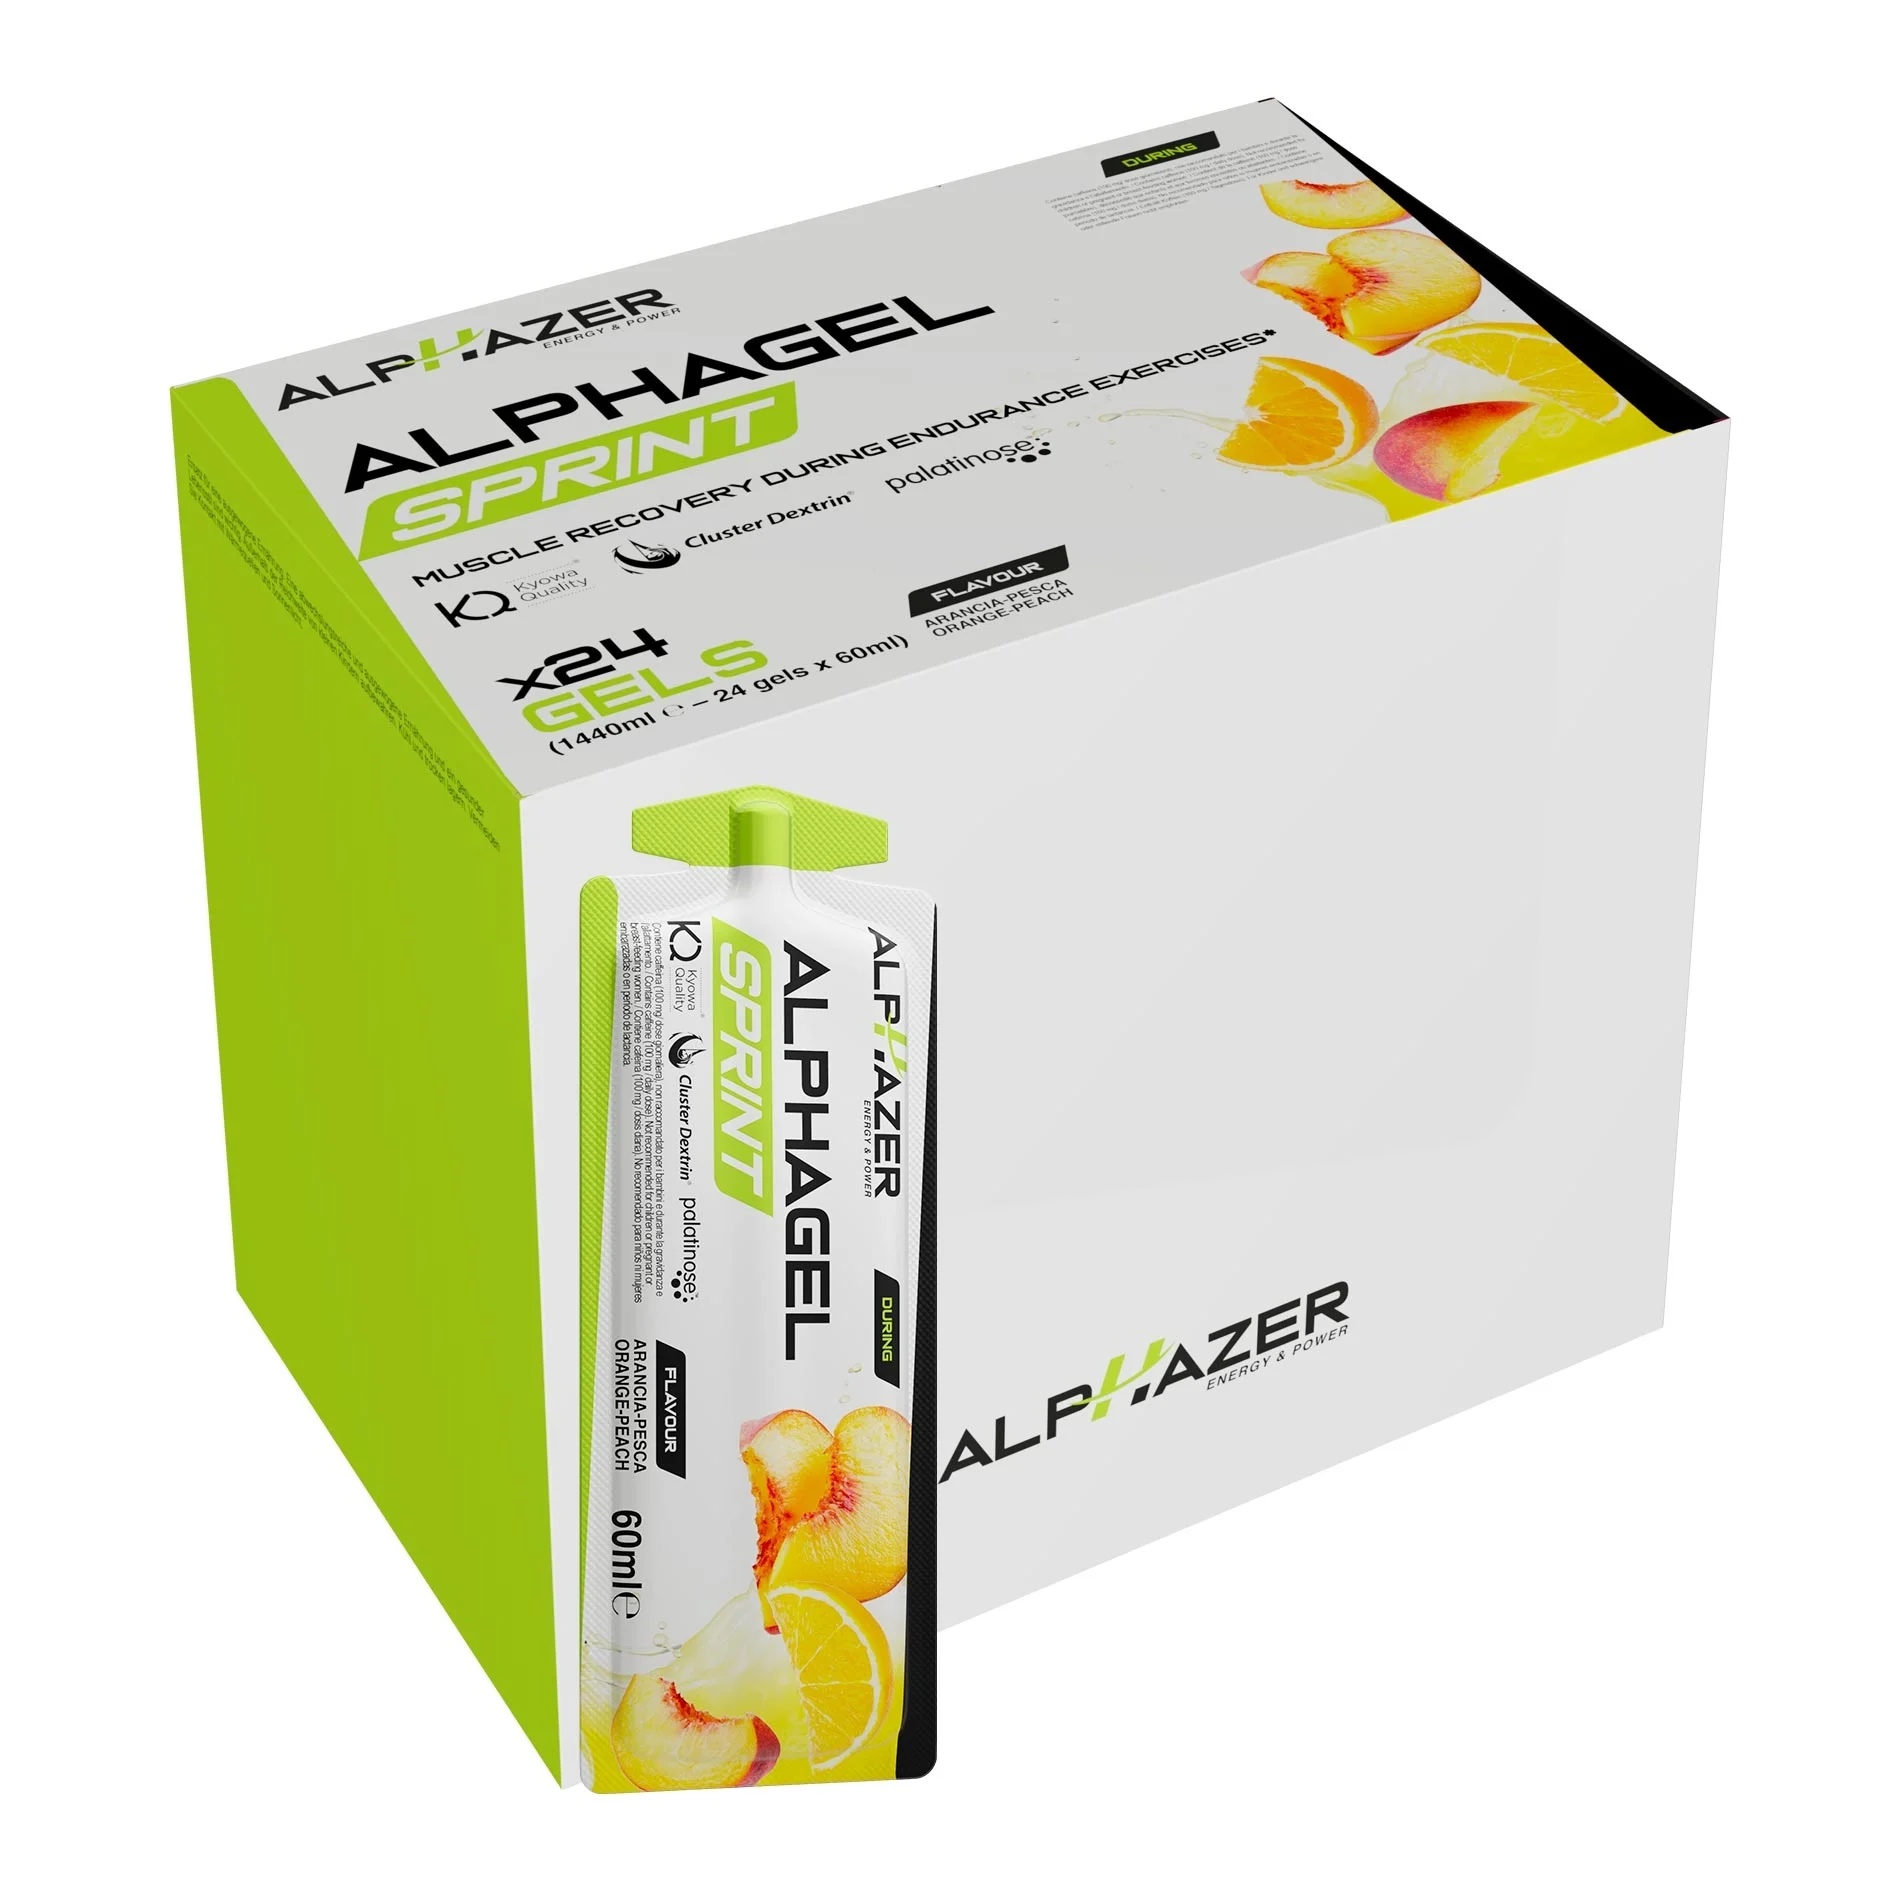 Alphazer ALPHAGEL SPRINT BOX 24 doses